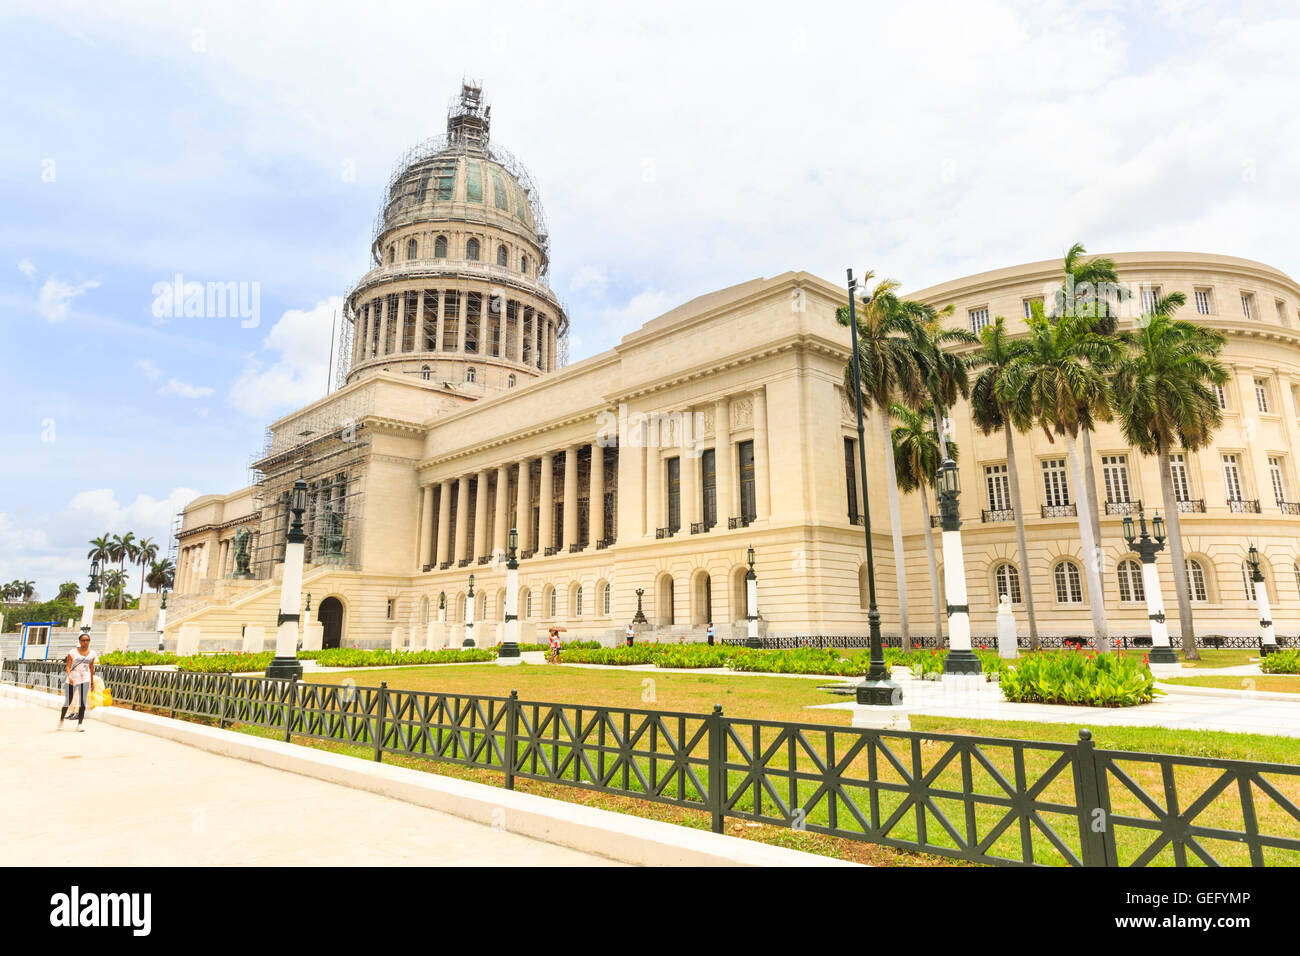 El Capitolio, das National Capitol Building, Havanna, Kuba Stockfoto